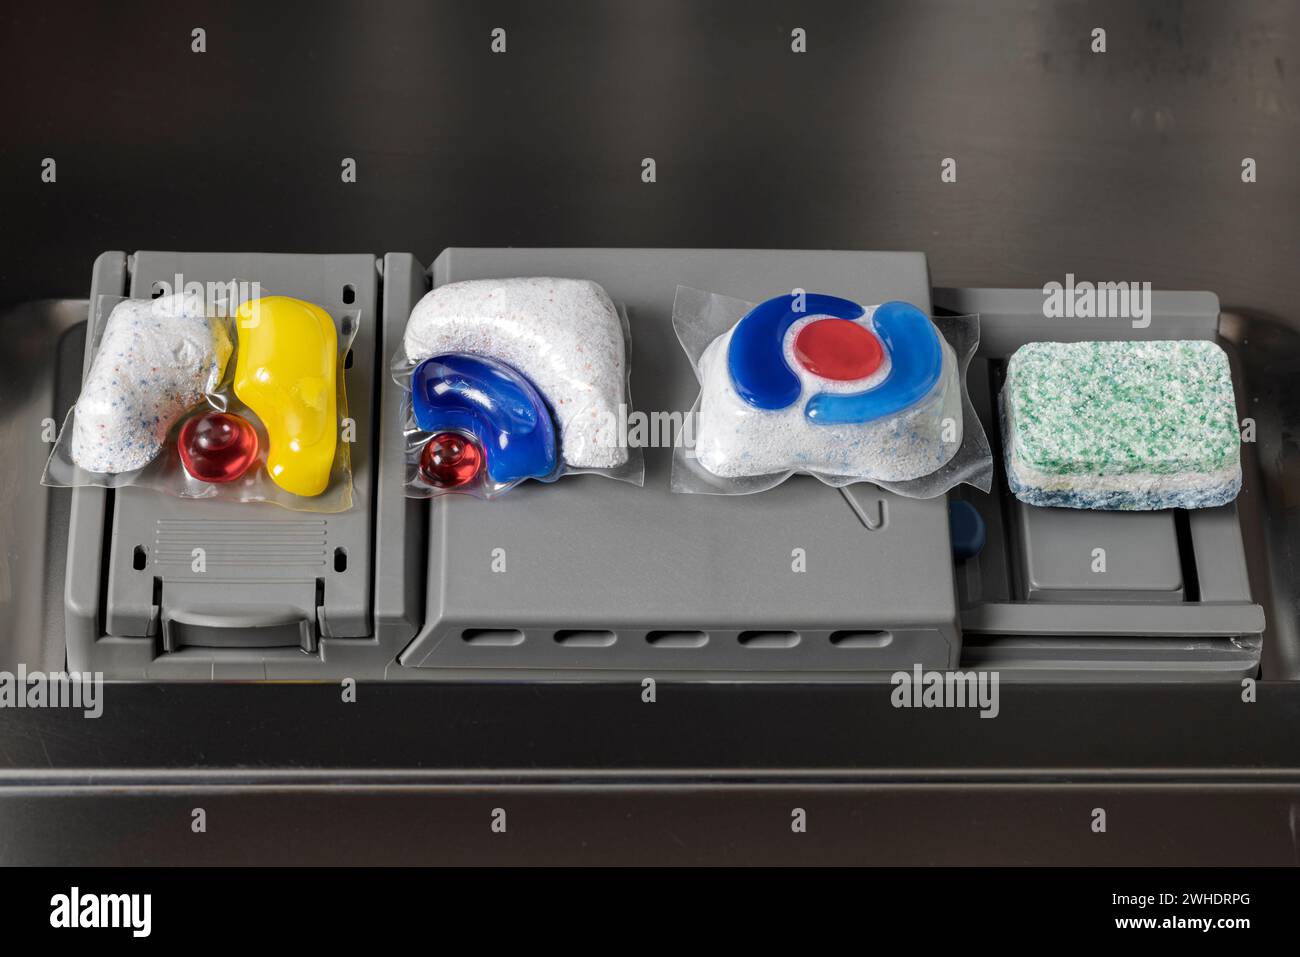 Dosing chamber, four dishwasher detergent tabs, various brands, dishwasher, detail, Stock Photo